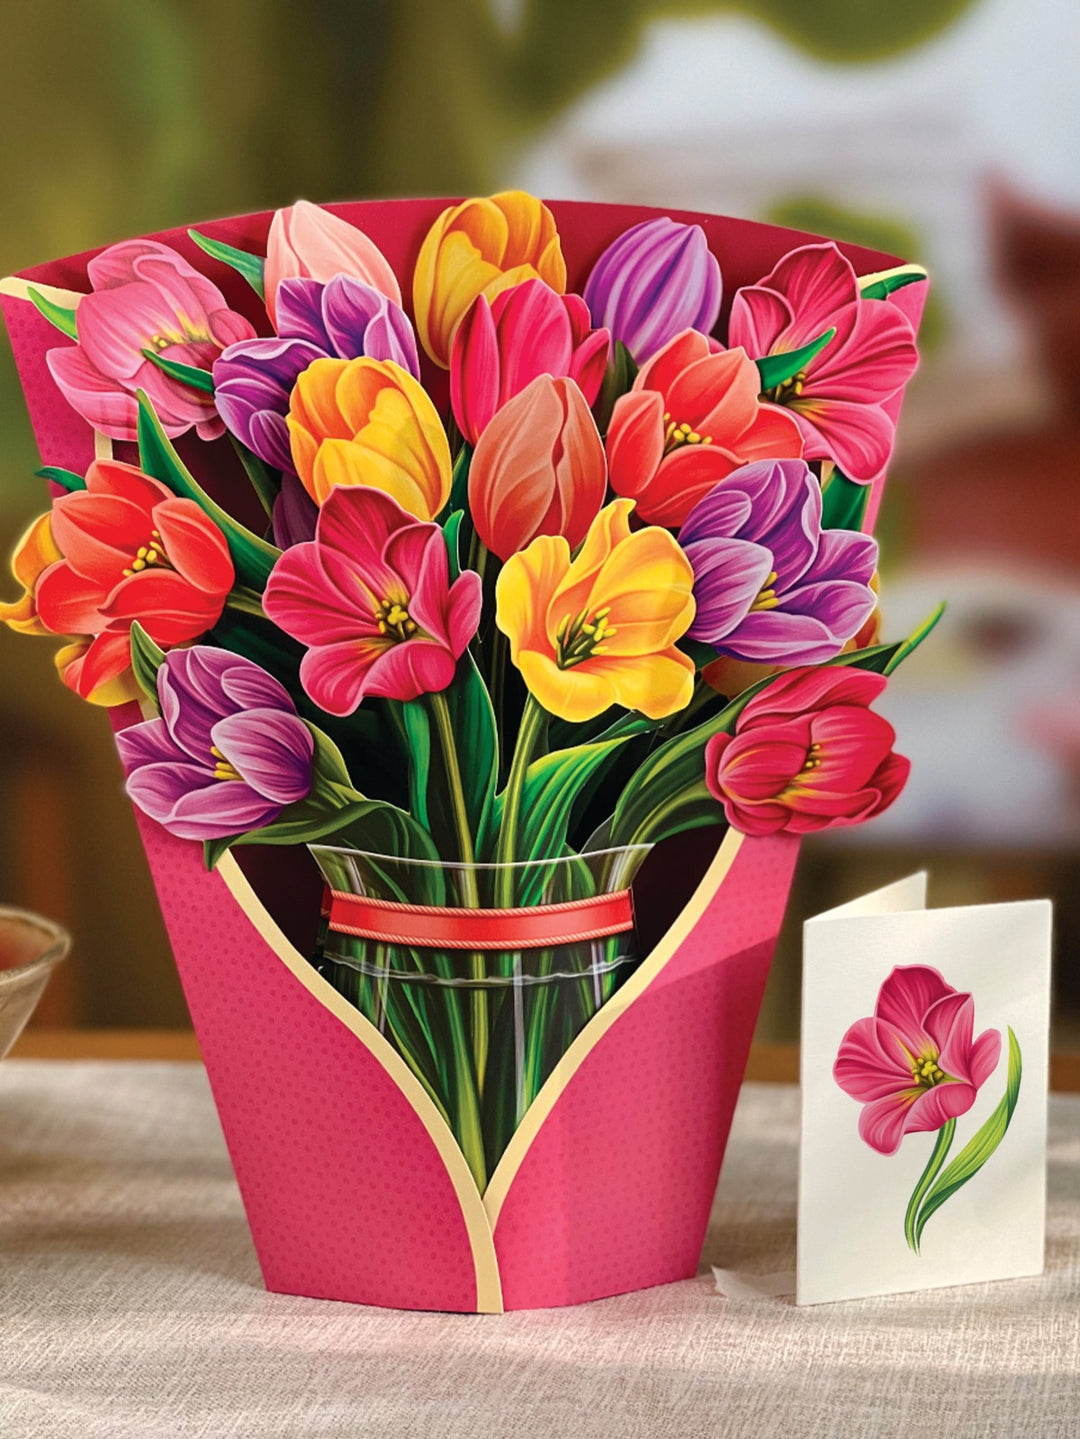 Festive Tulips